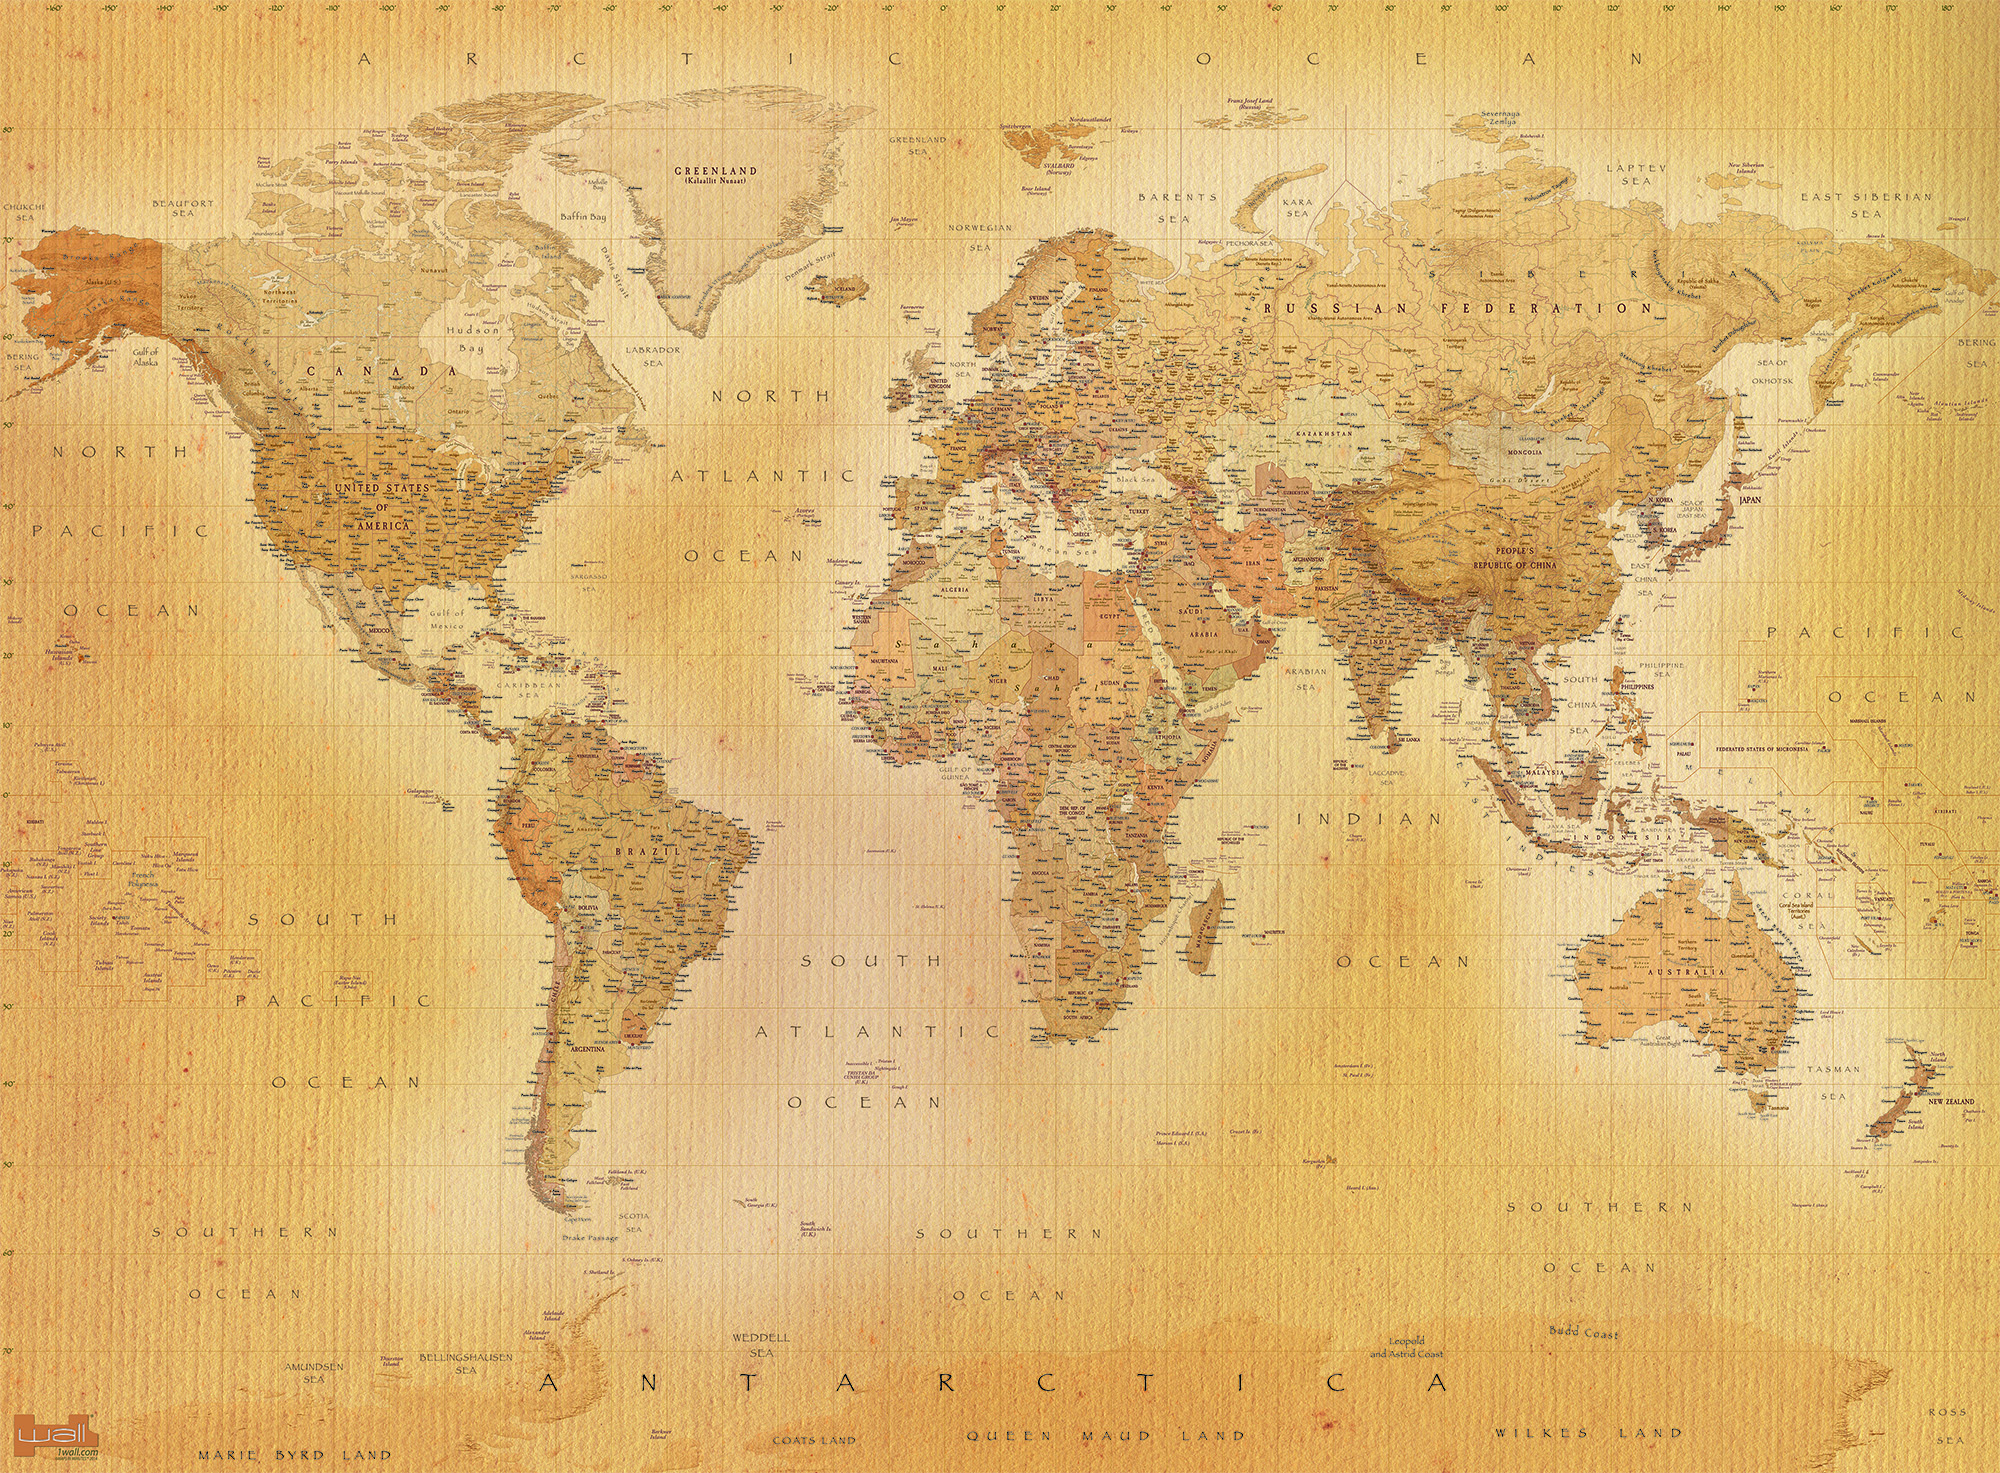 High Resolution World Map Wallpapers